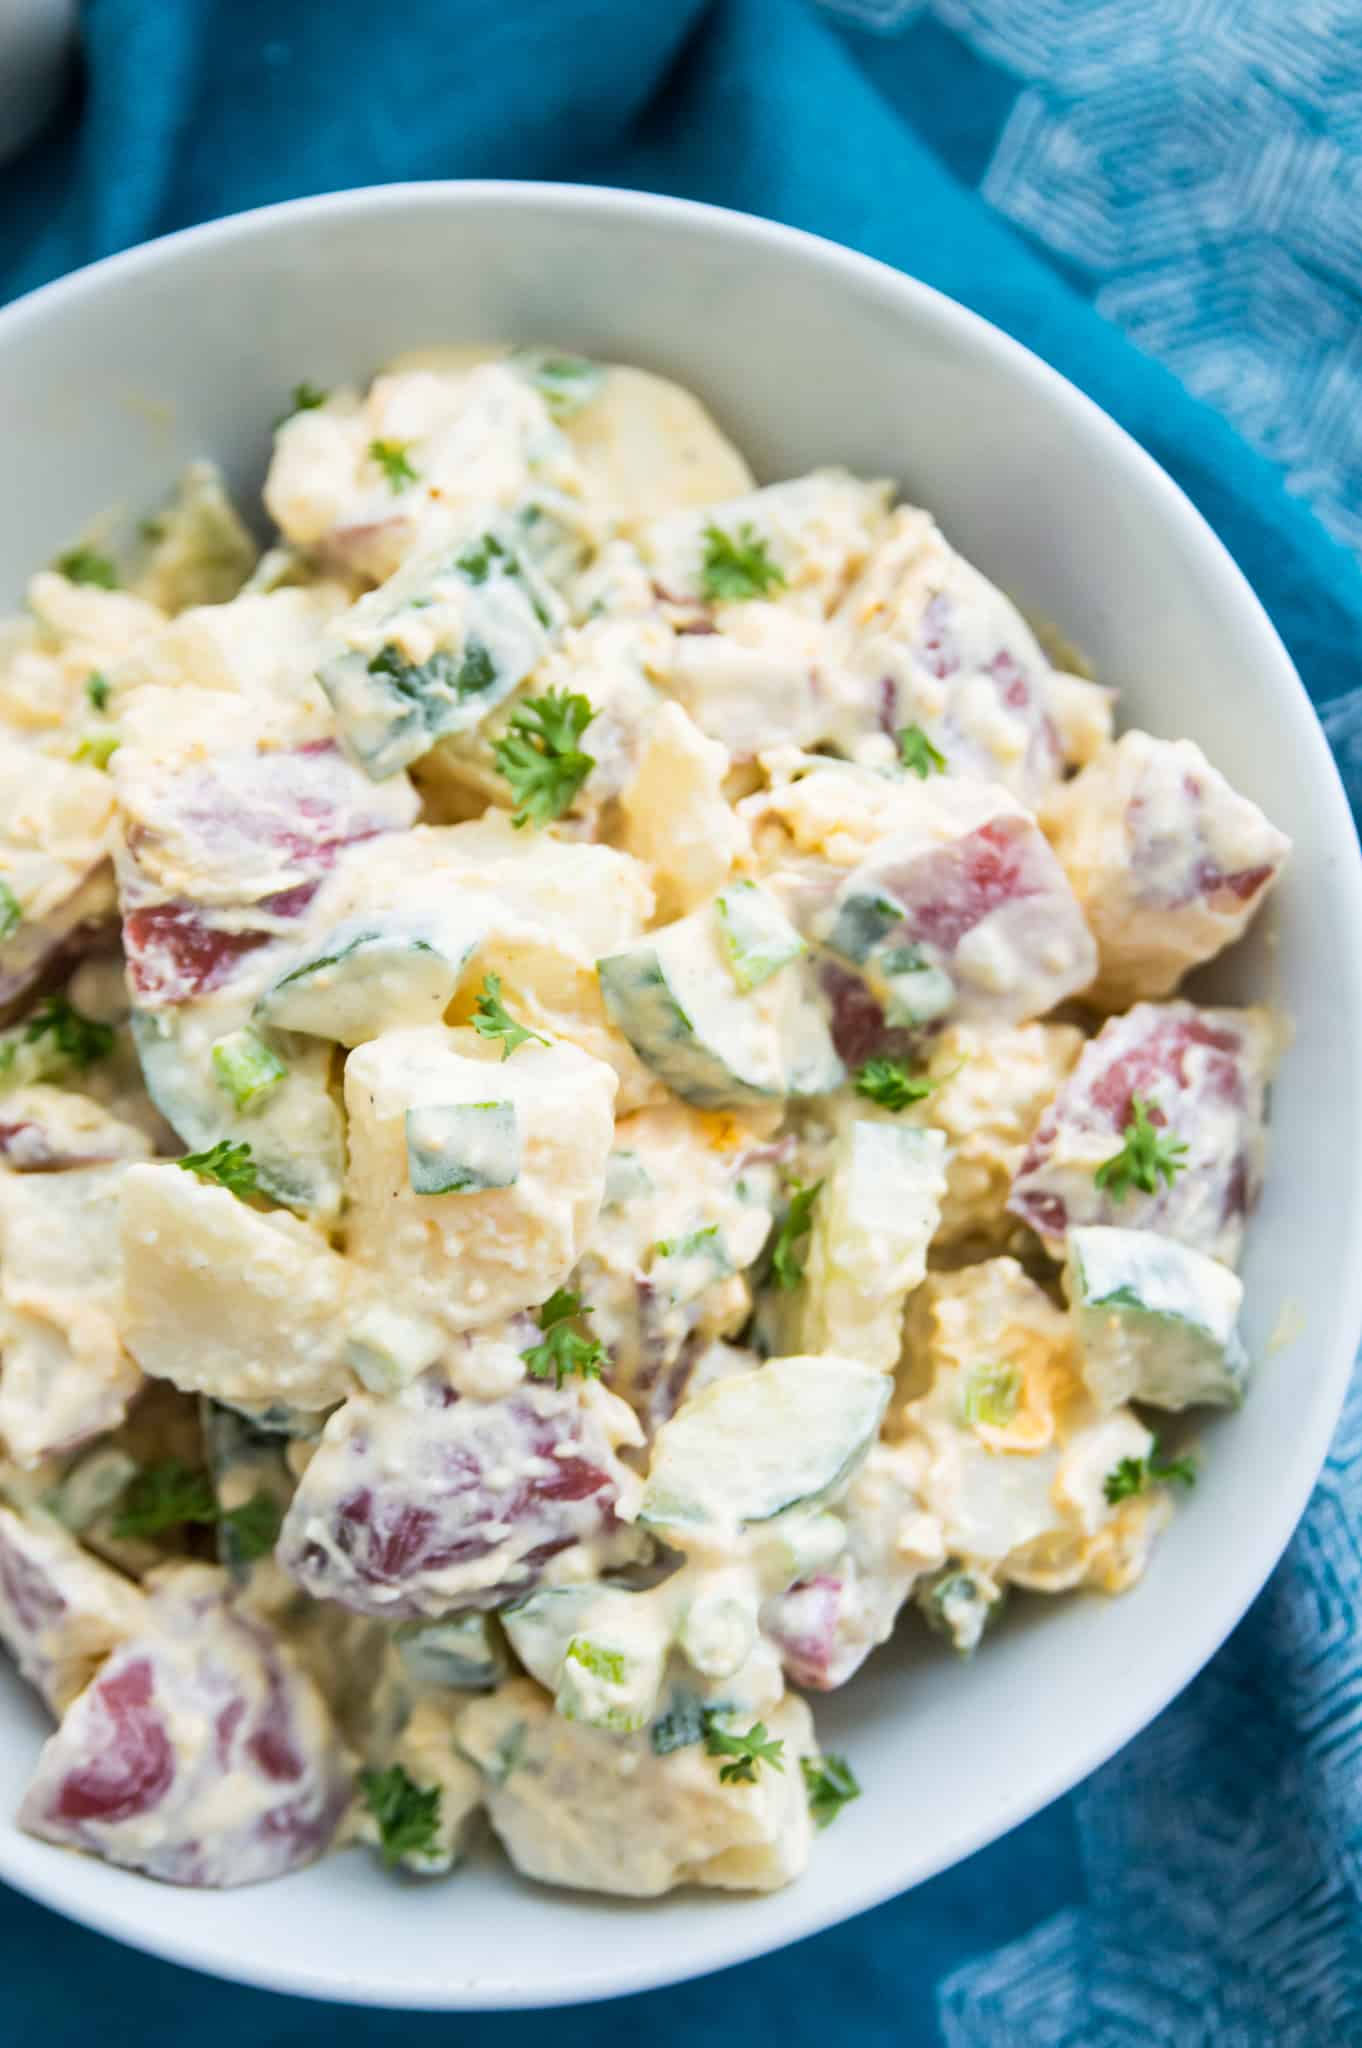 A bowl of creamy potato salad garnished with fresh parsley.